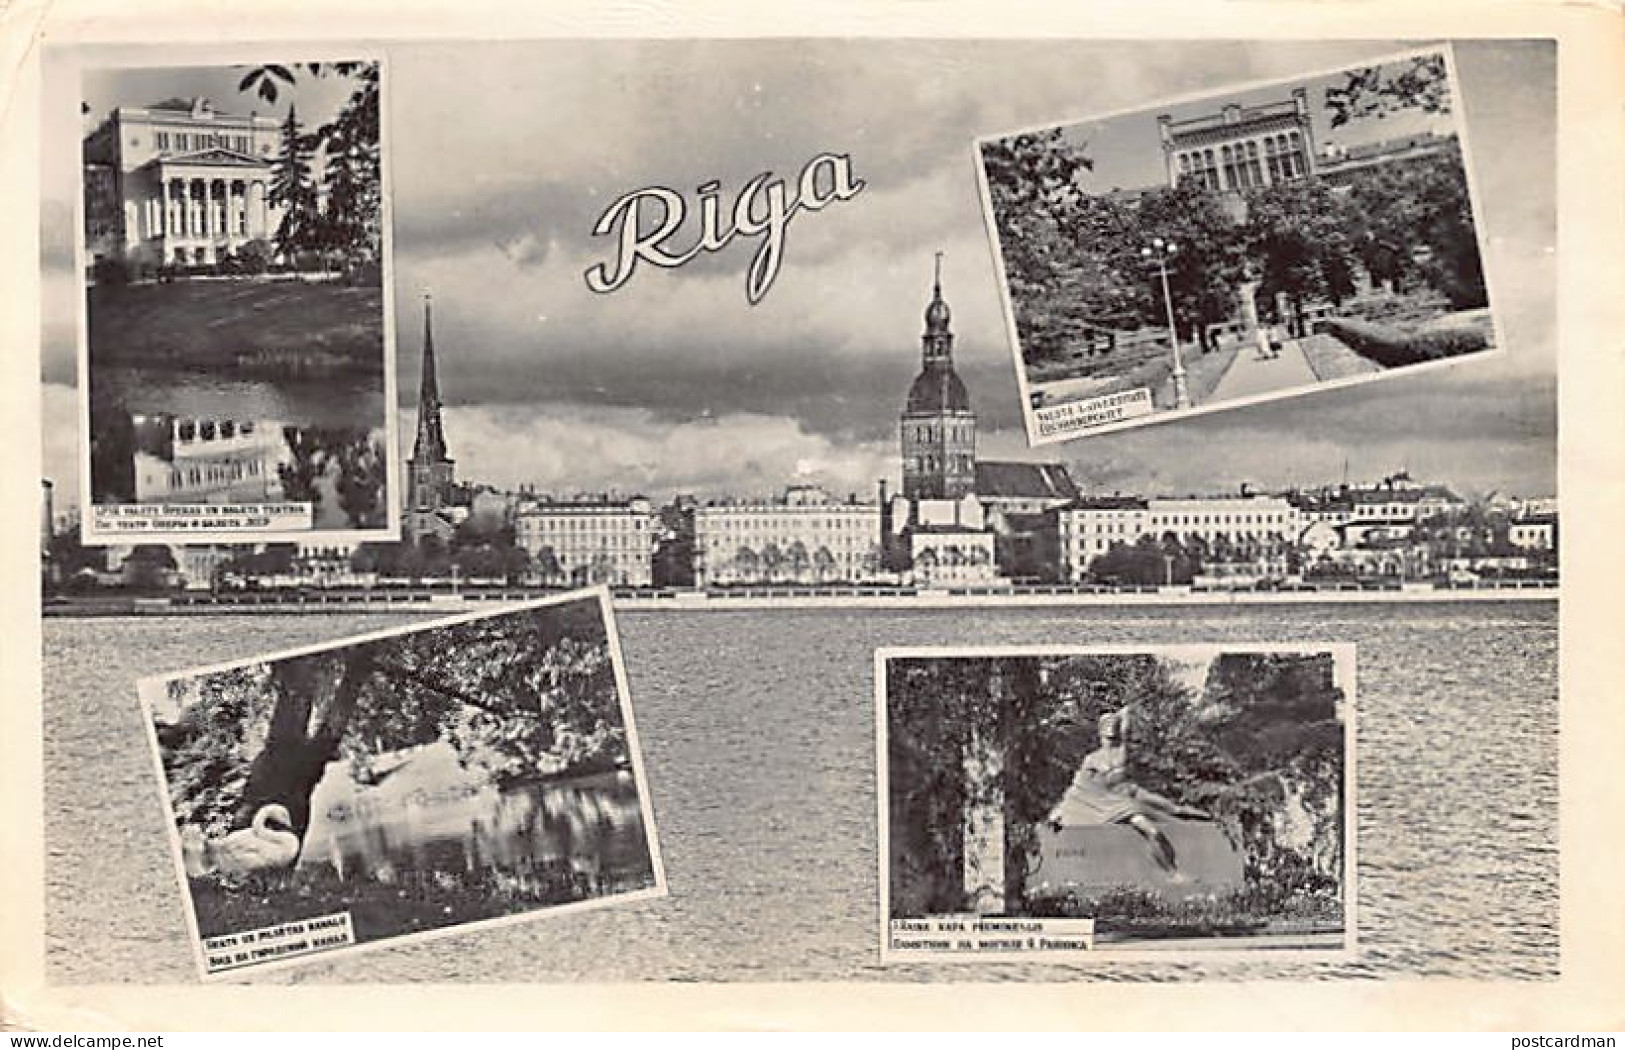 Latvia - RIGA - Mutli-views Postcard - Publ. Riga Photo  - Lettland